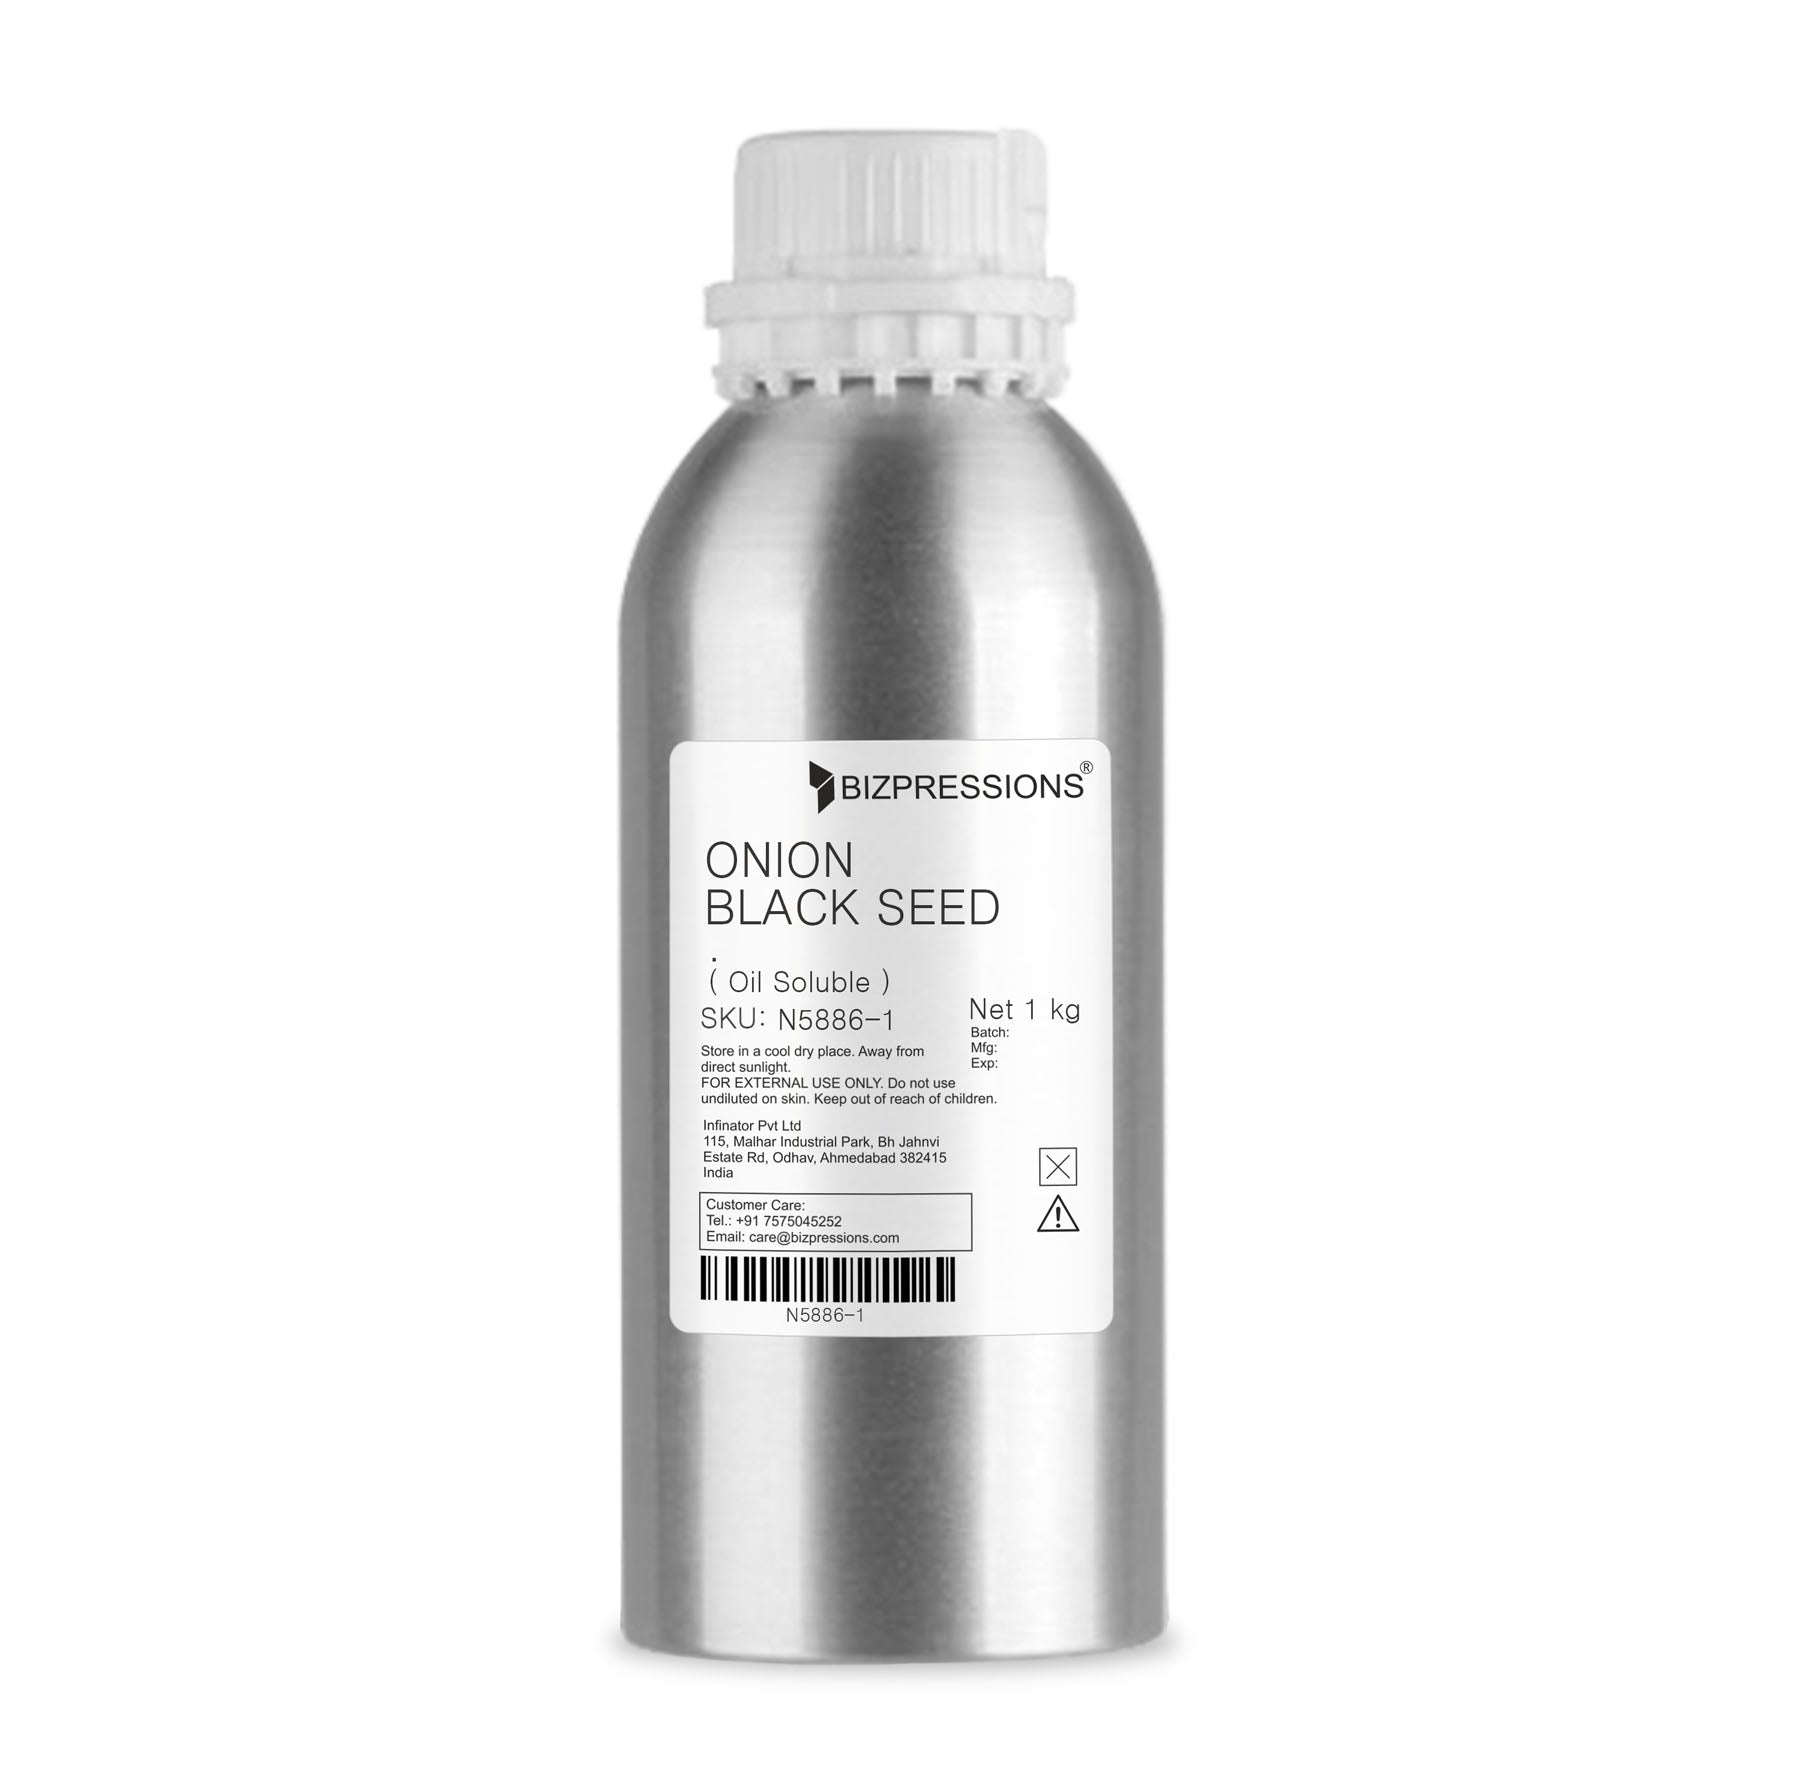 ONION BLACK SEED - Fragrance ( Oil Soluble ) - 1 kg